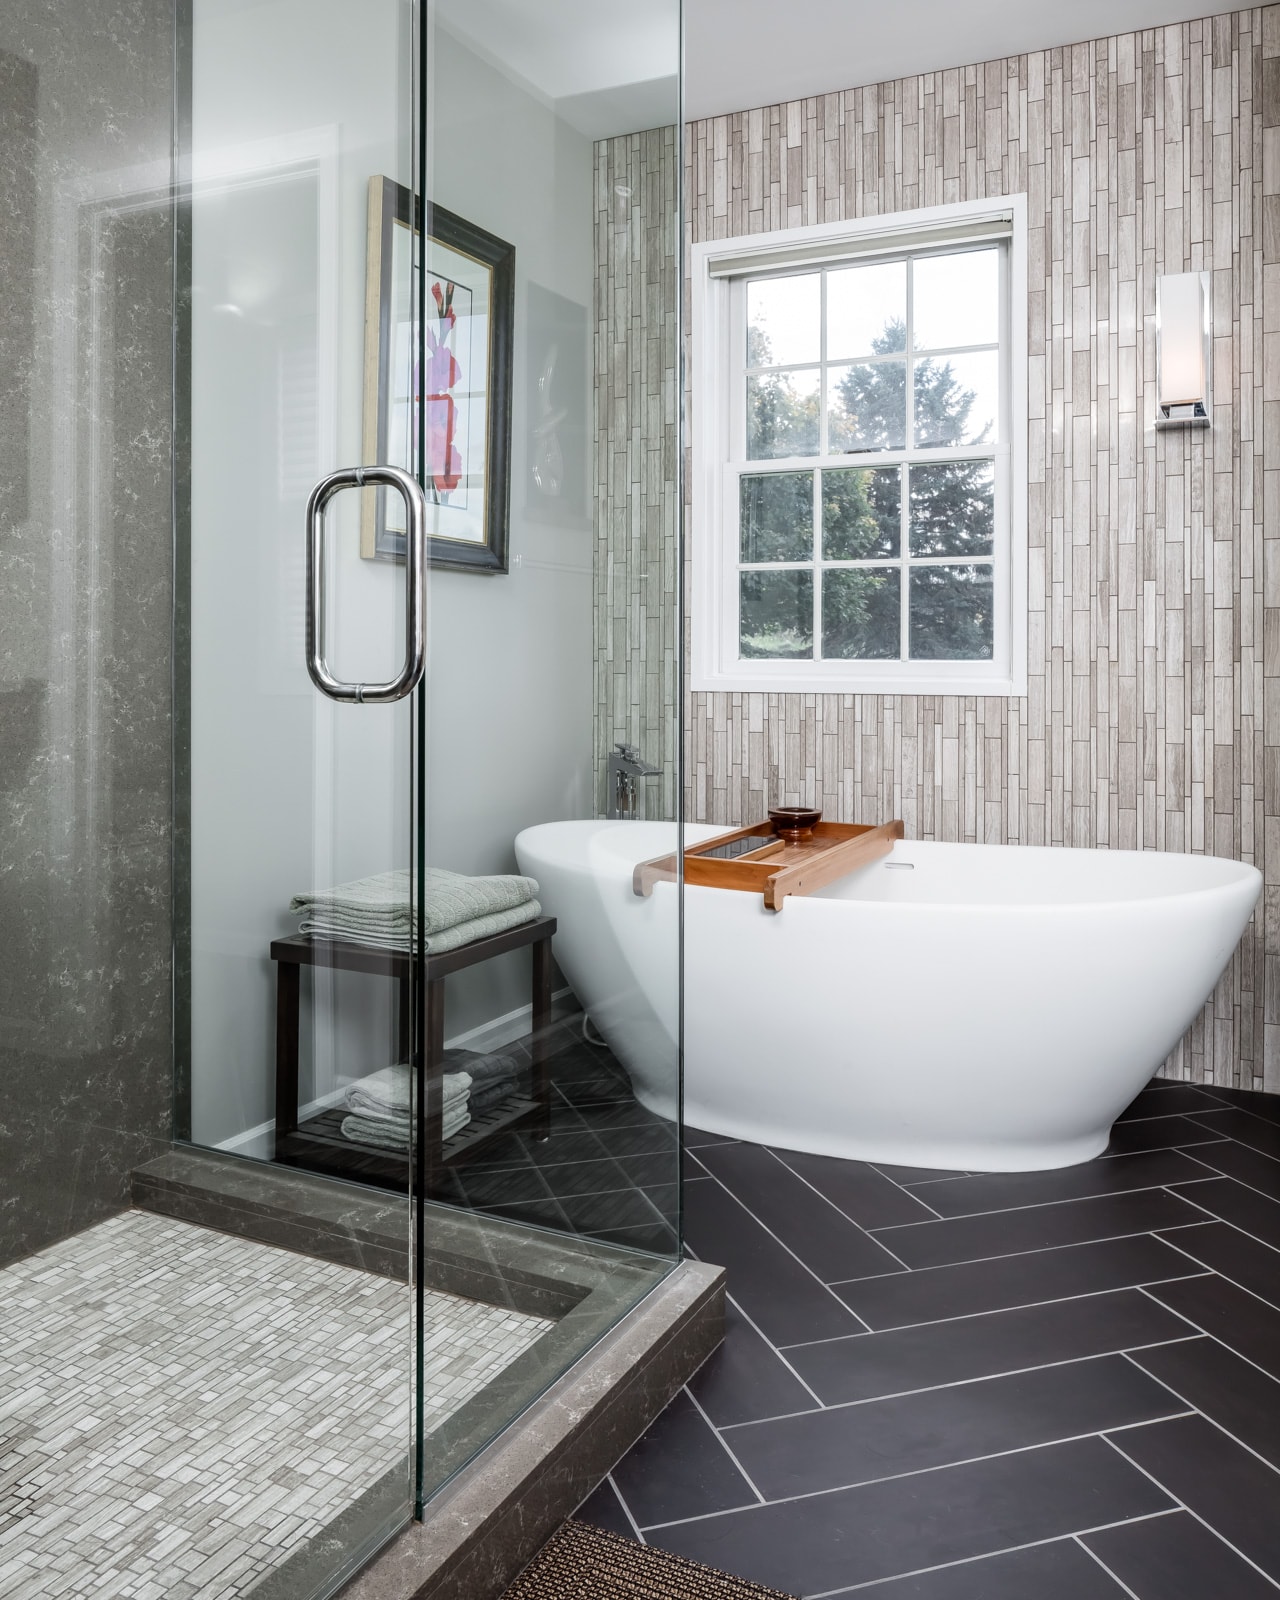 Contractor-grade bath becomes award-winning luxury spa